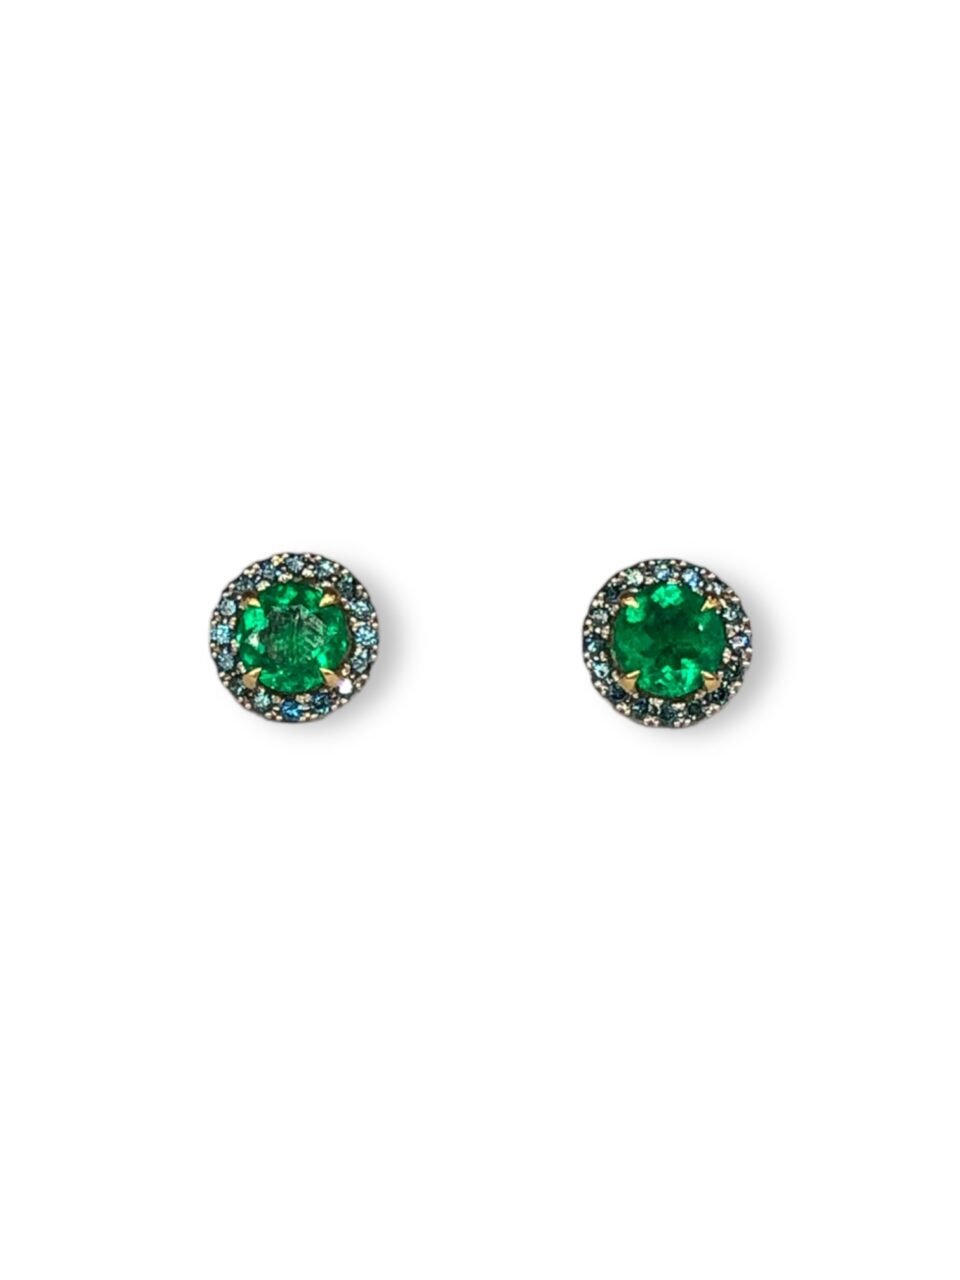 colombian emeralds, muzo emeralds, alpine green, emerald earrings, george smith